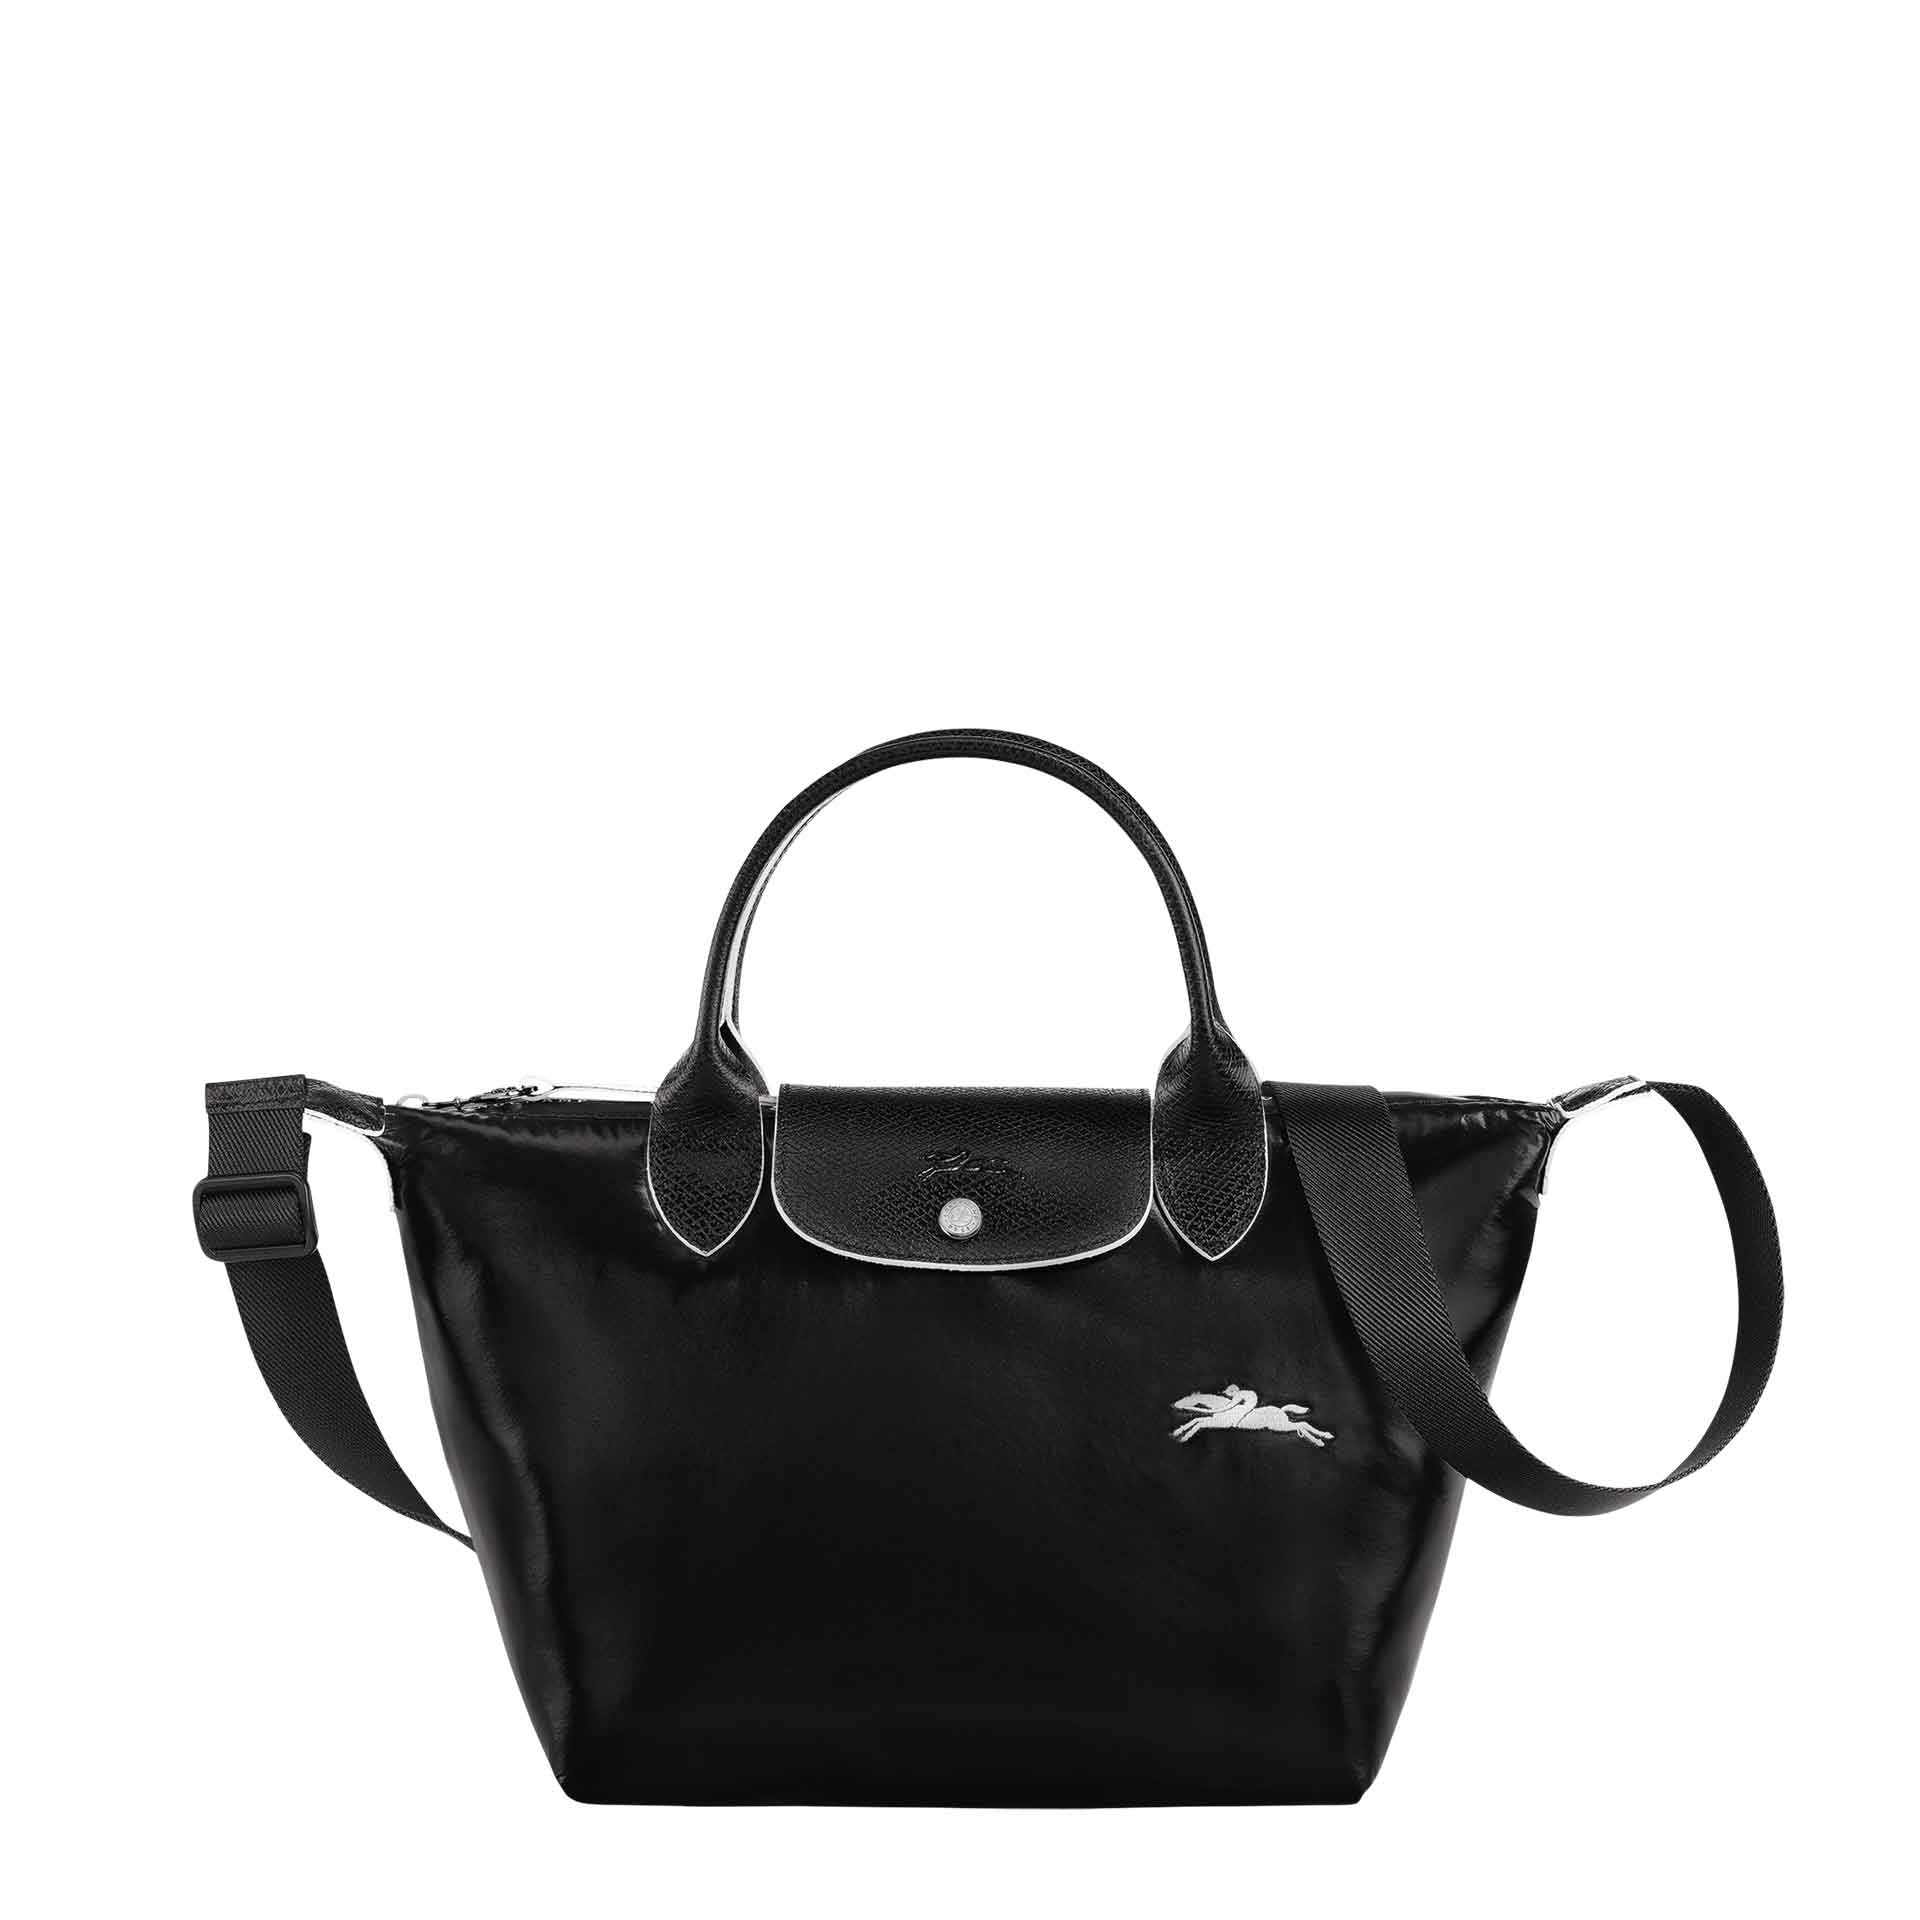 Longchamp Le Pliage Kollektion Handtasche S black